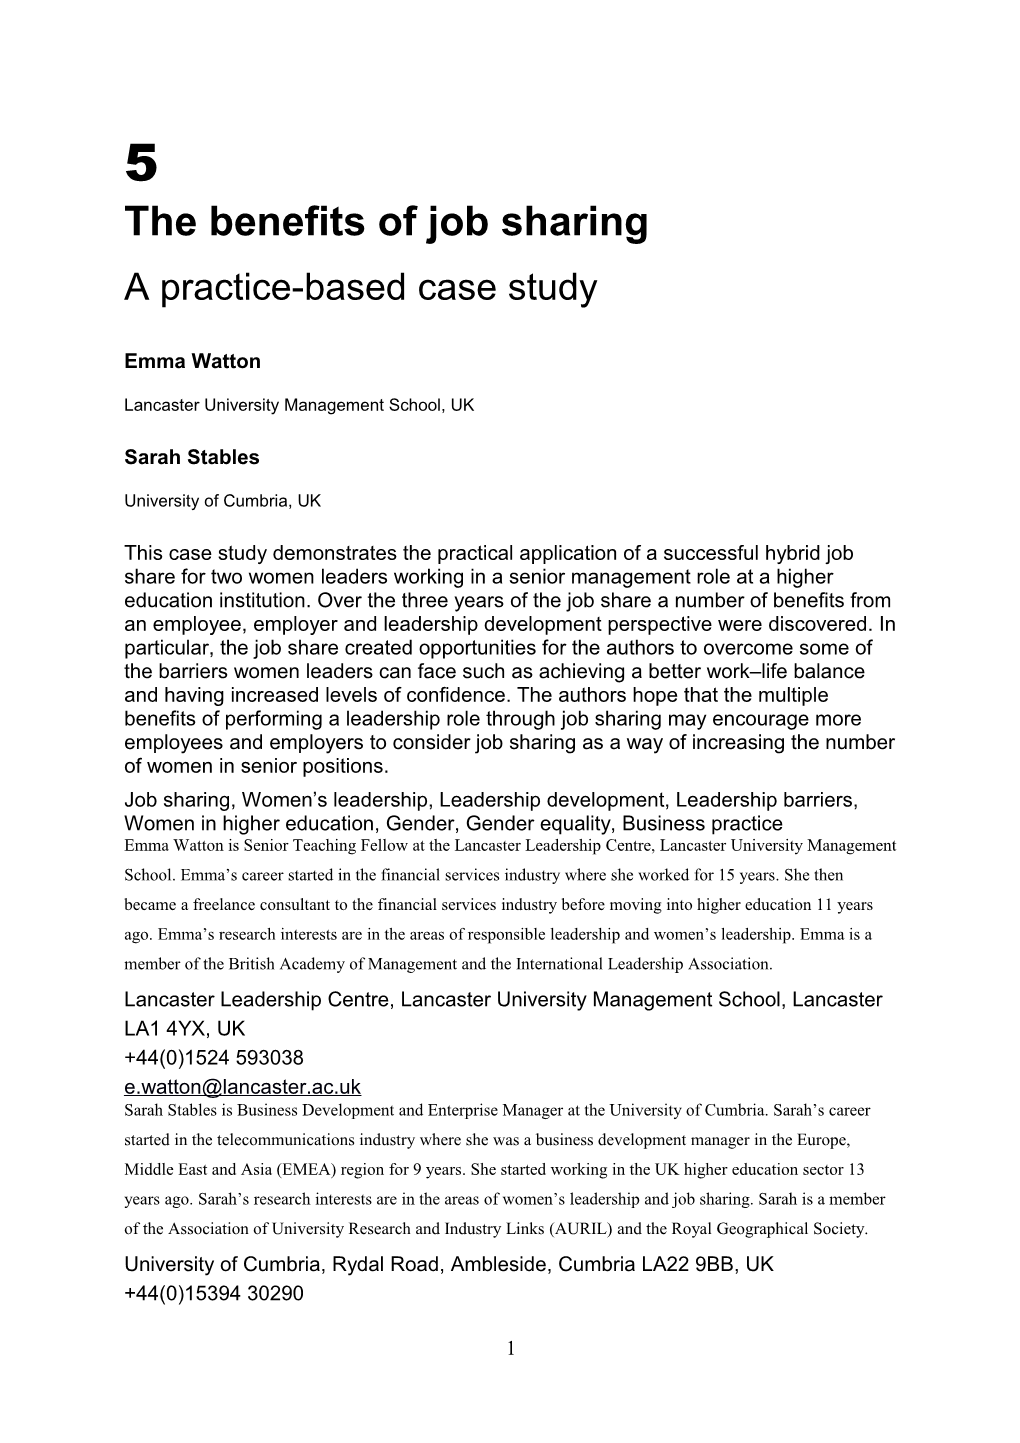 The Benefits of Job Sharing